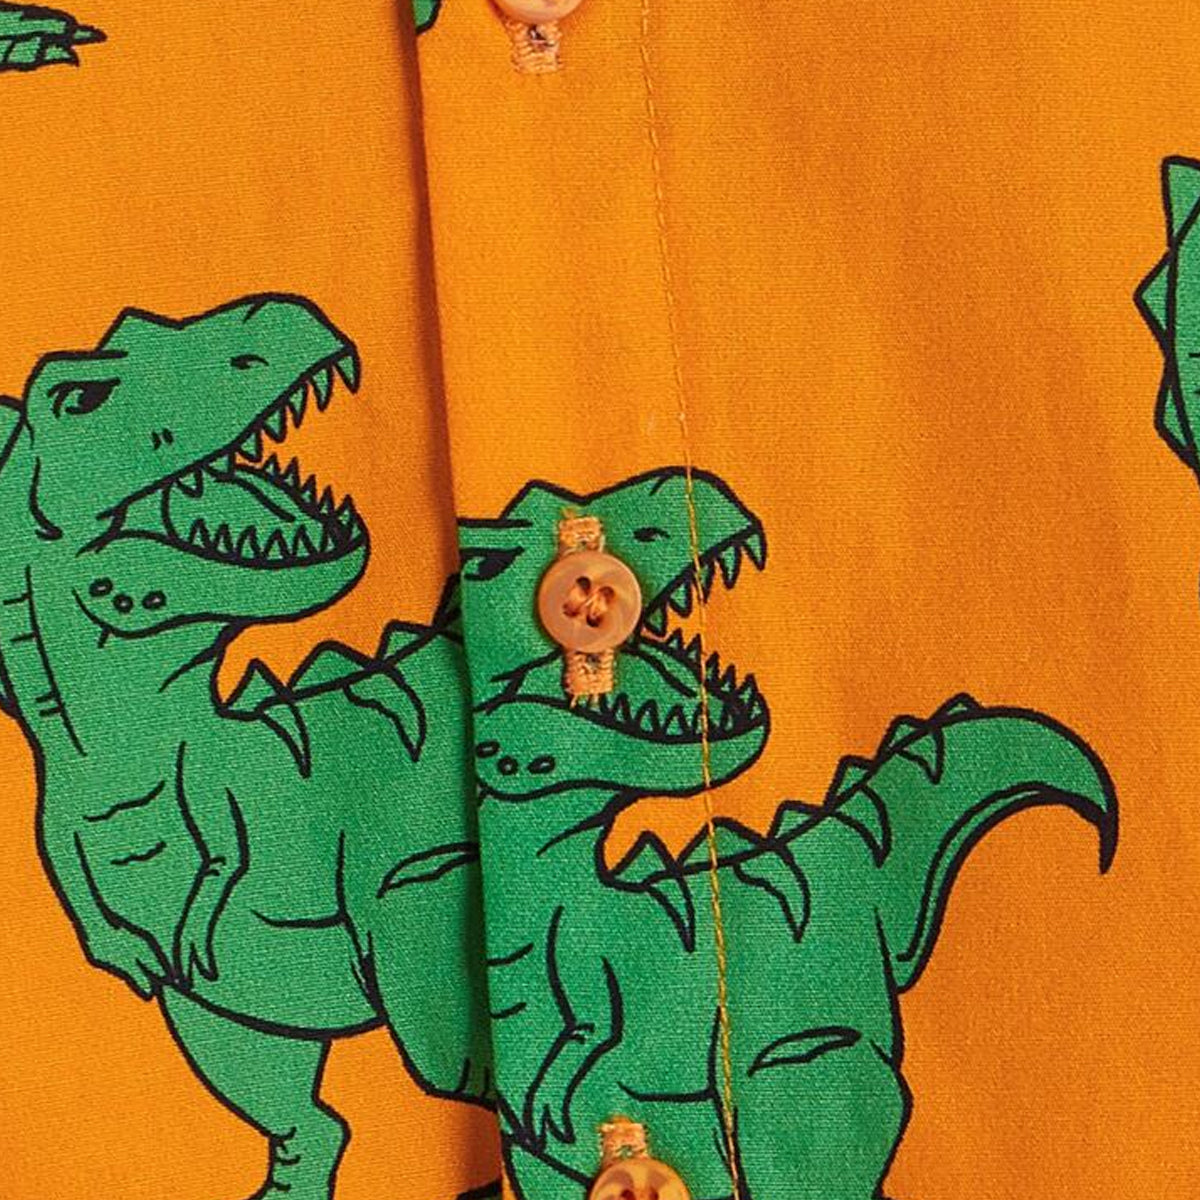 Venutaloza Kids Dinosaur Casual Printed Shirt & Shorts Without tee Two Piece Set.